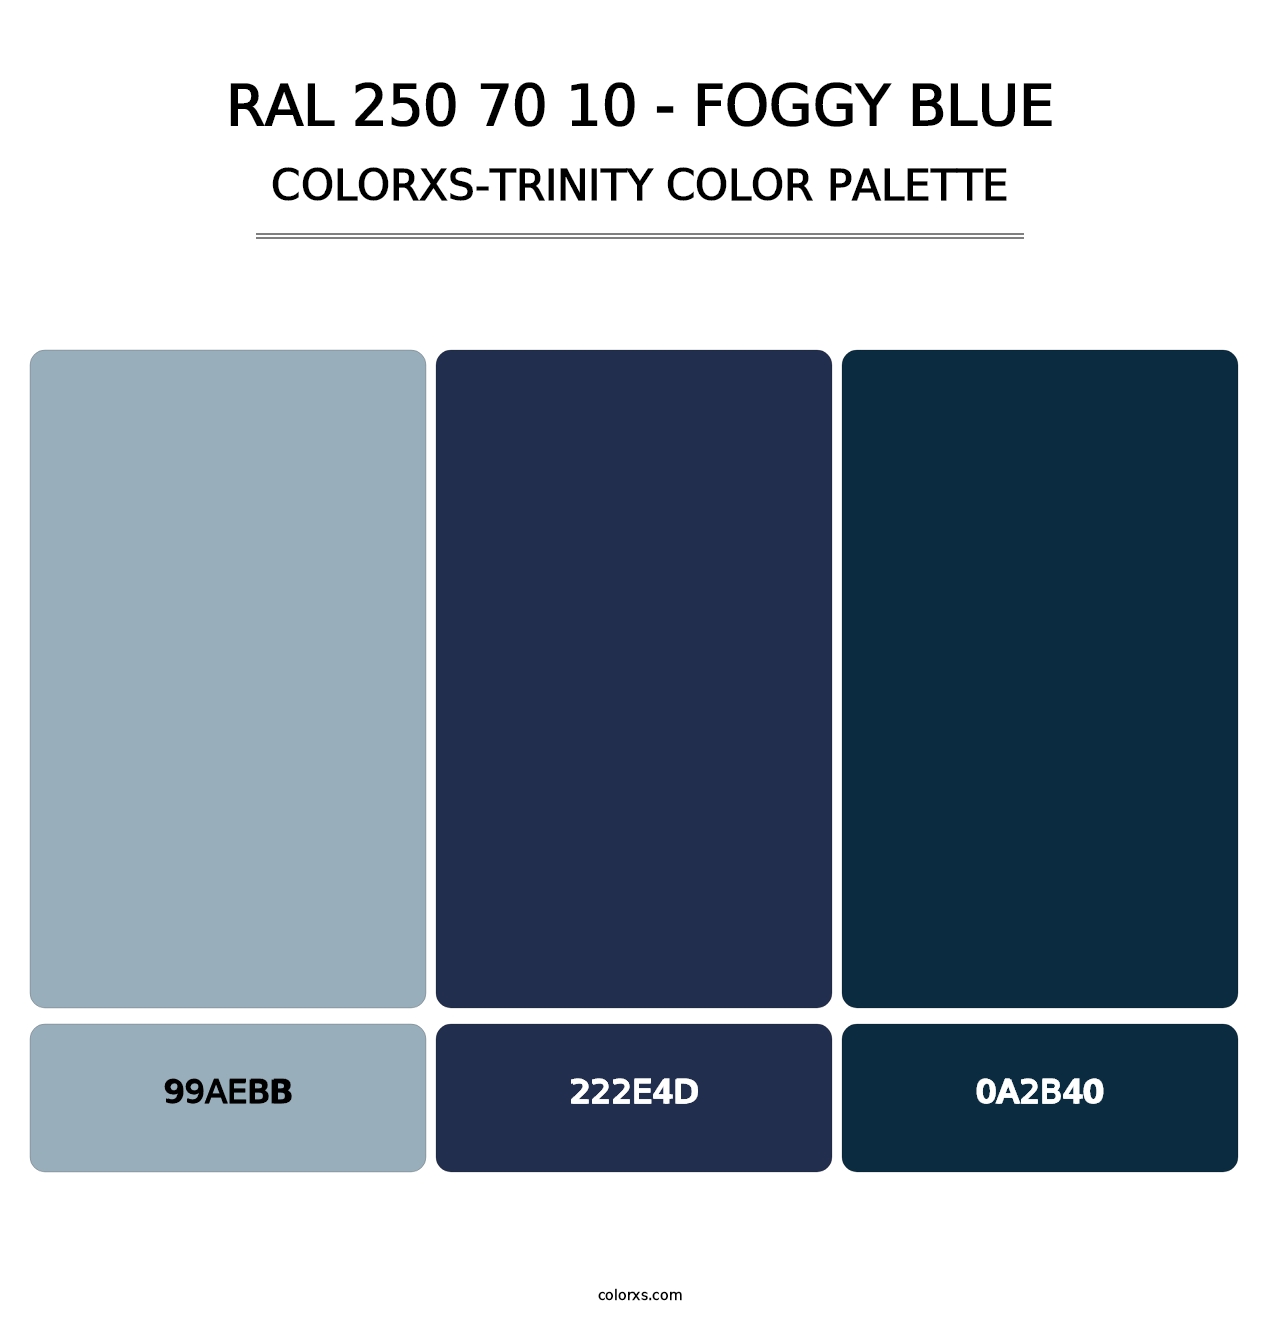 RAL 250 70 10 - Foggy Blue - Colorxs Trinity Palette